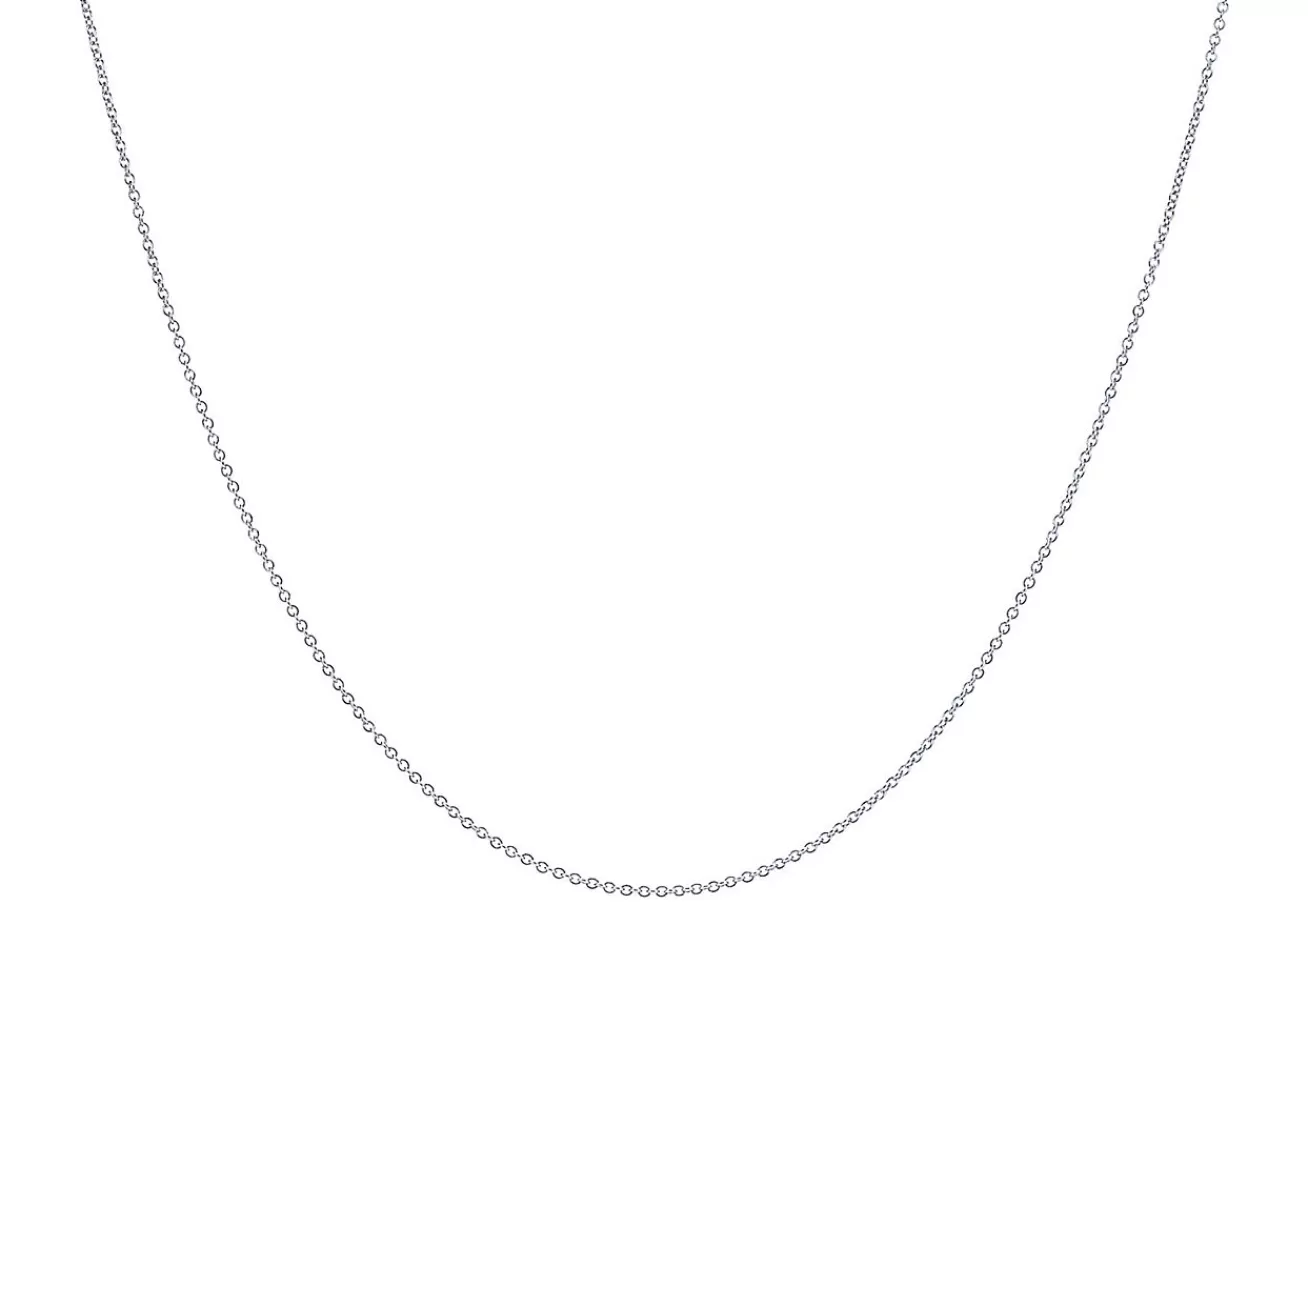 Tiffany & Co. Shop Platinum Chain Necklace in 18" Length | ^ Necklaces & Pendants | Platinum Jewelry